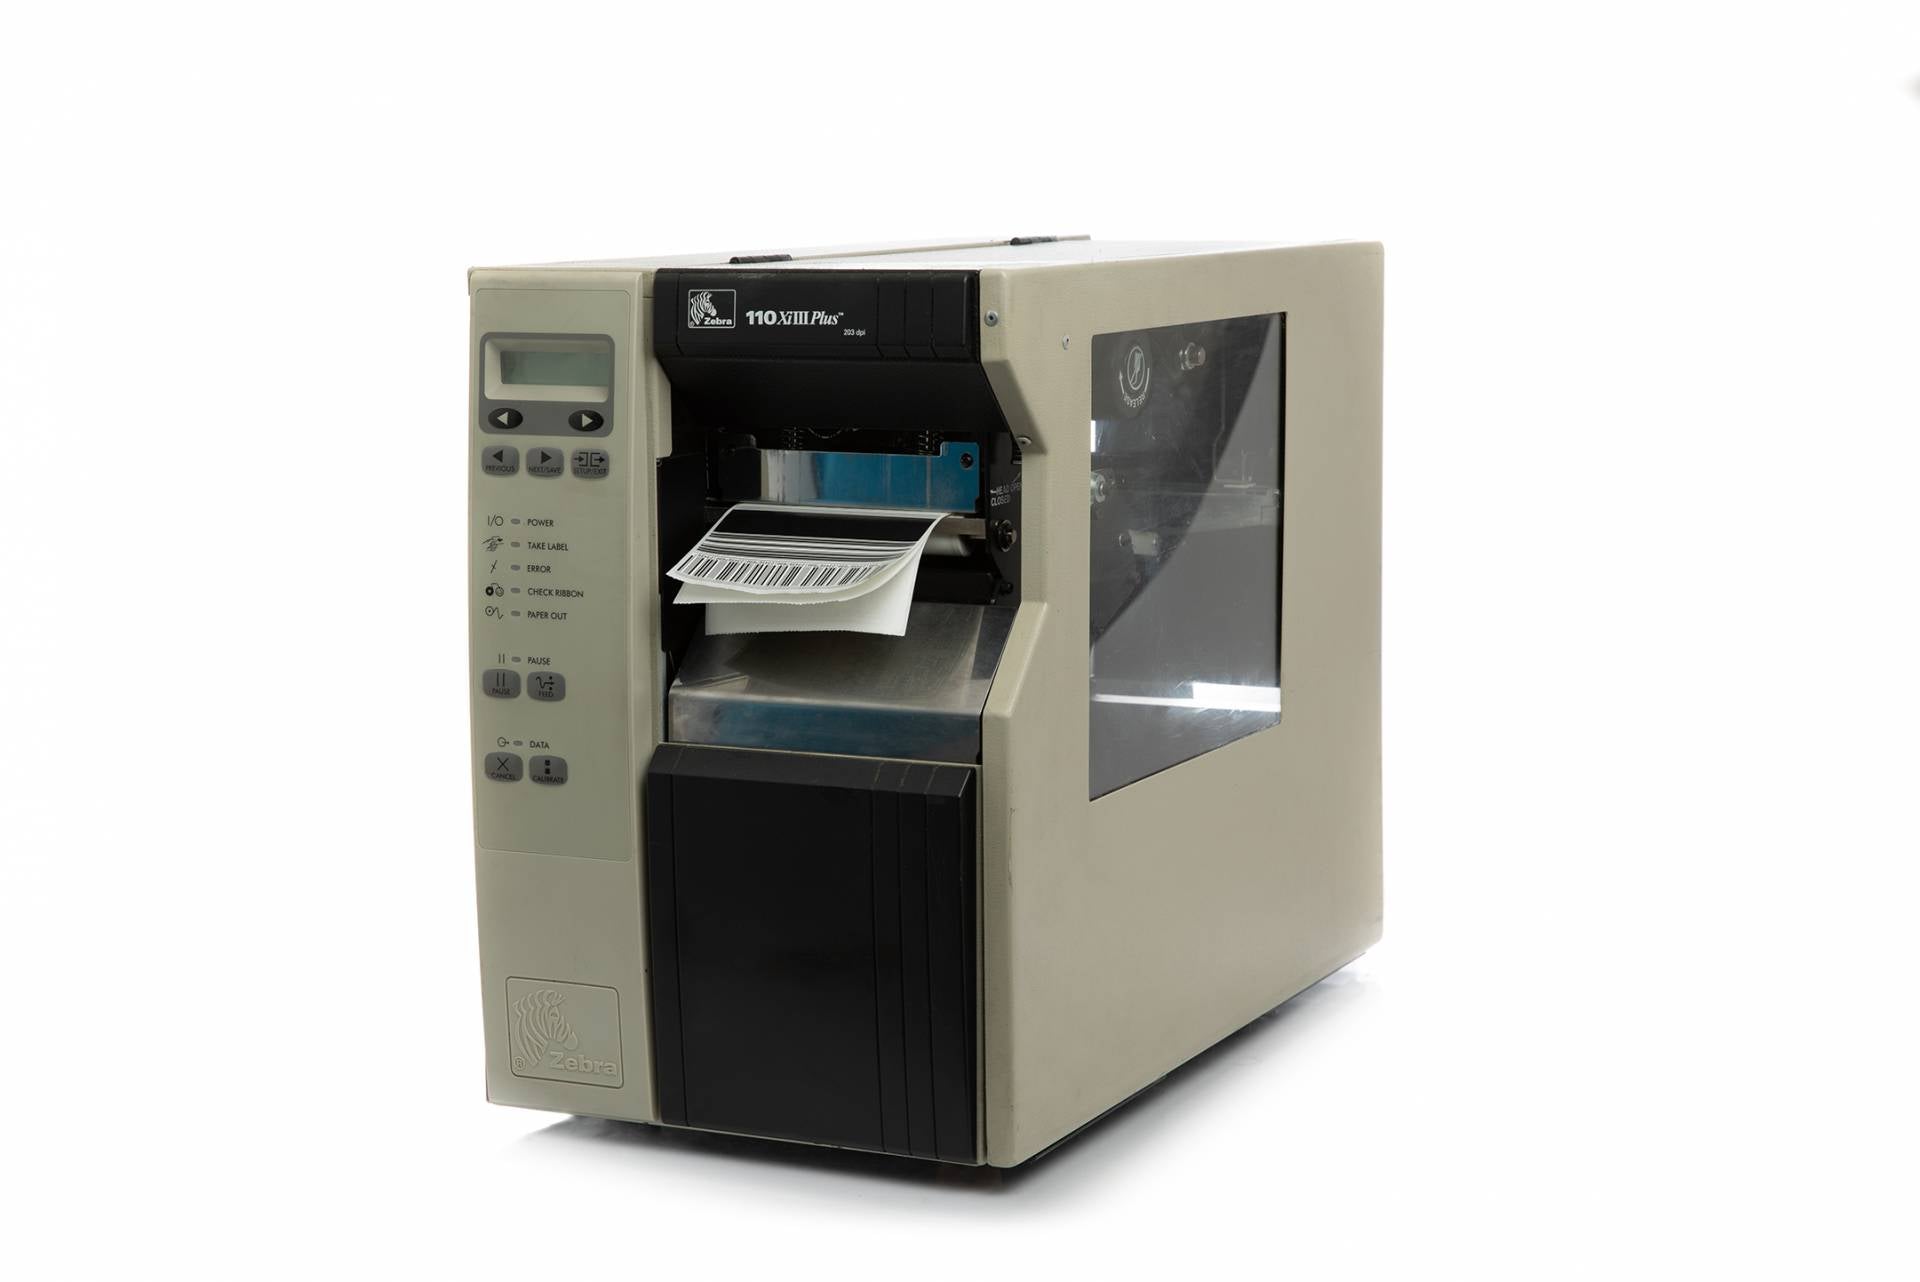 Zebra 110xiIII Plus Thermal Label Printer